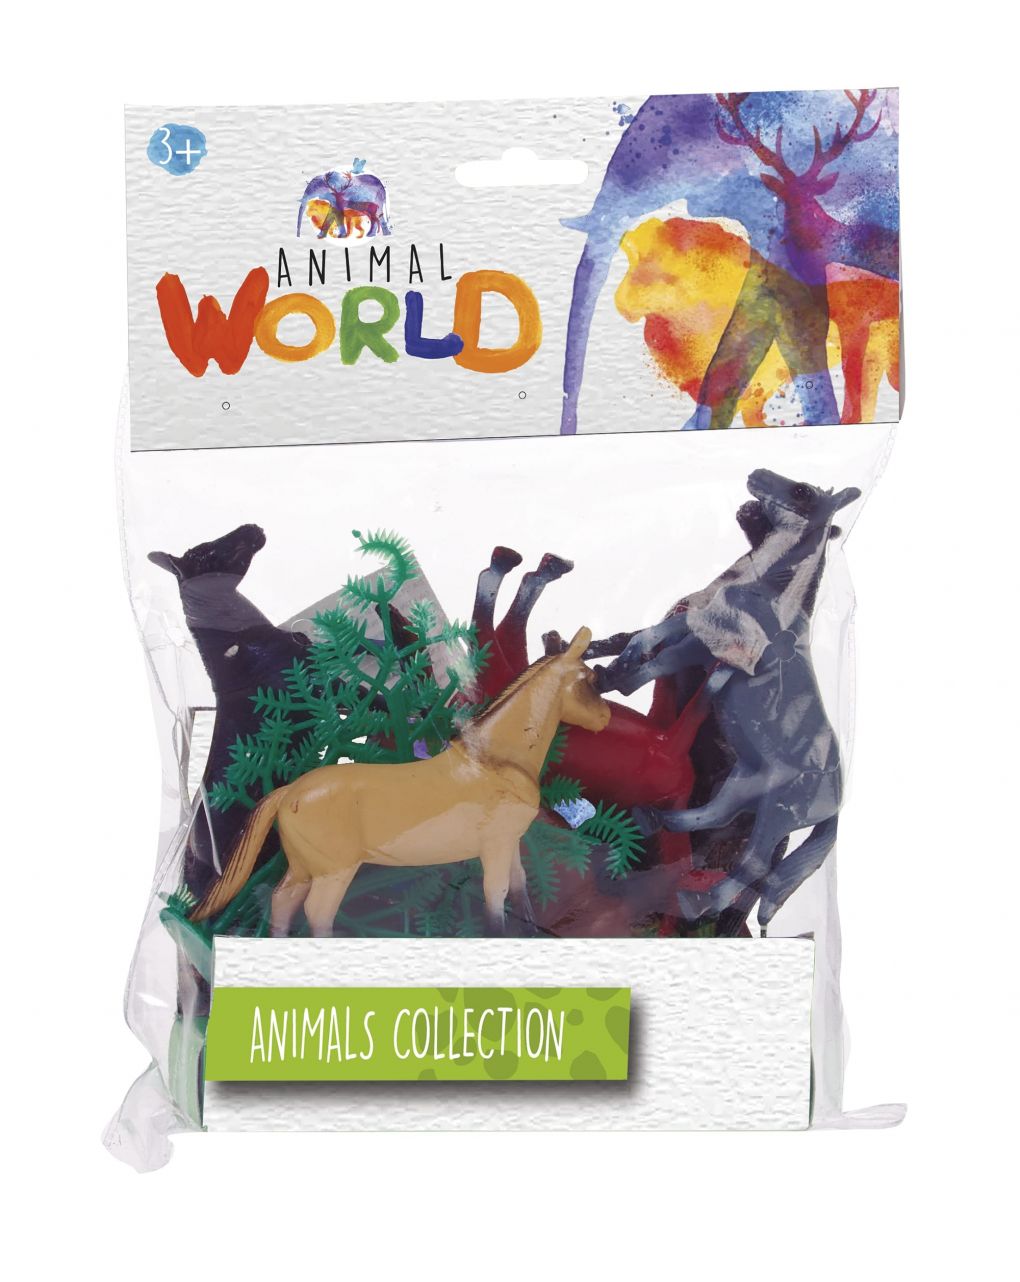 Animal world - set animali - animals collection - Animal World